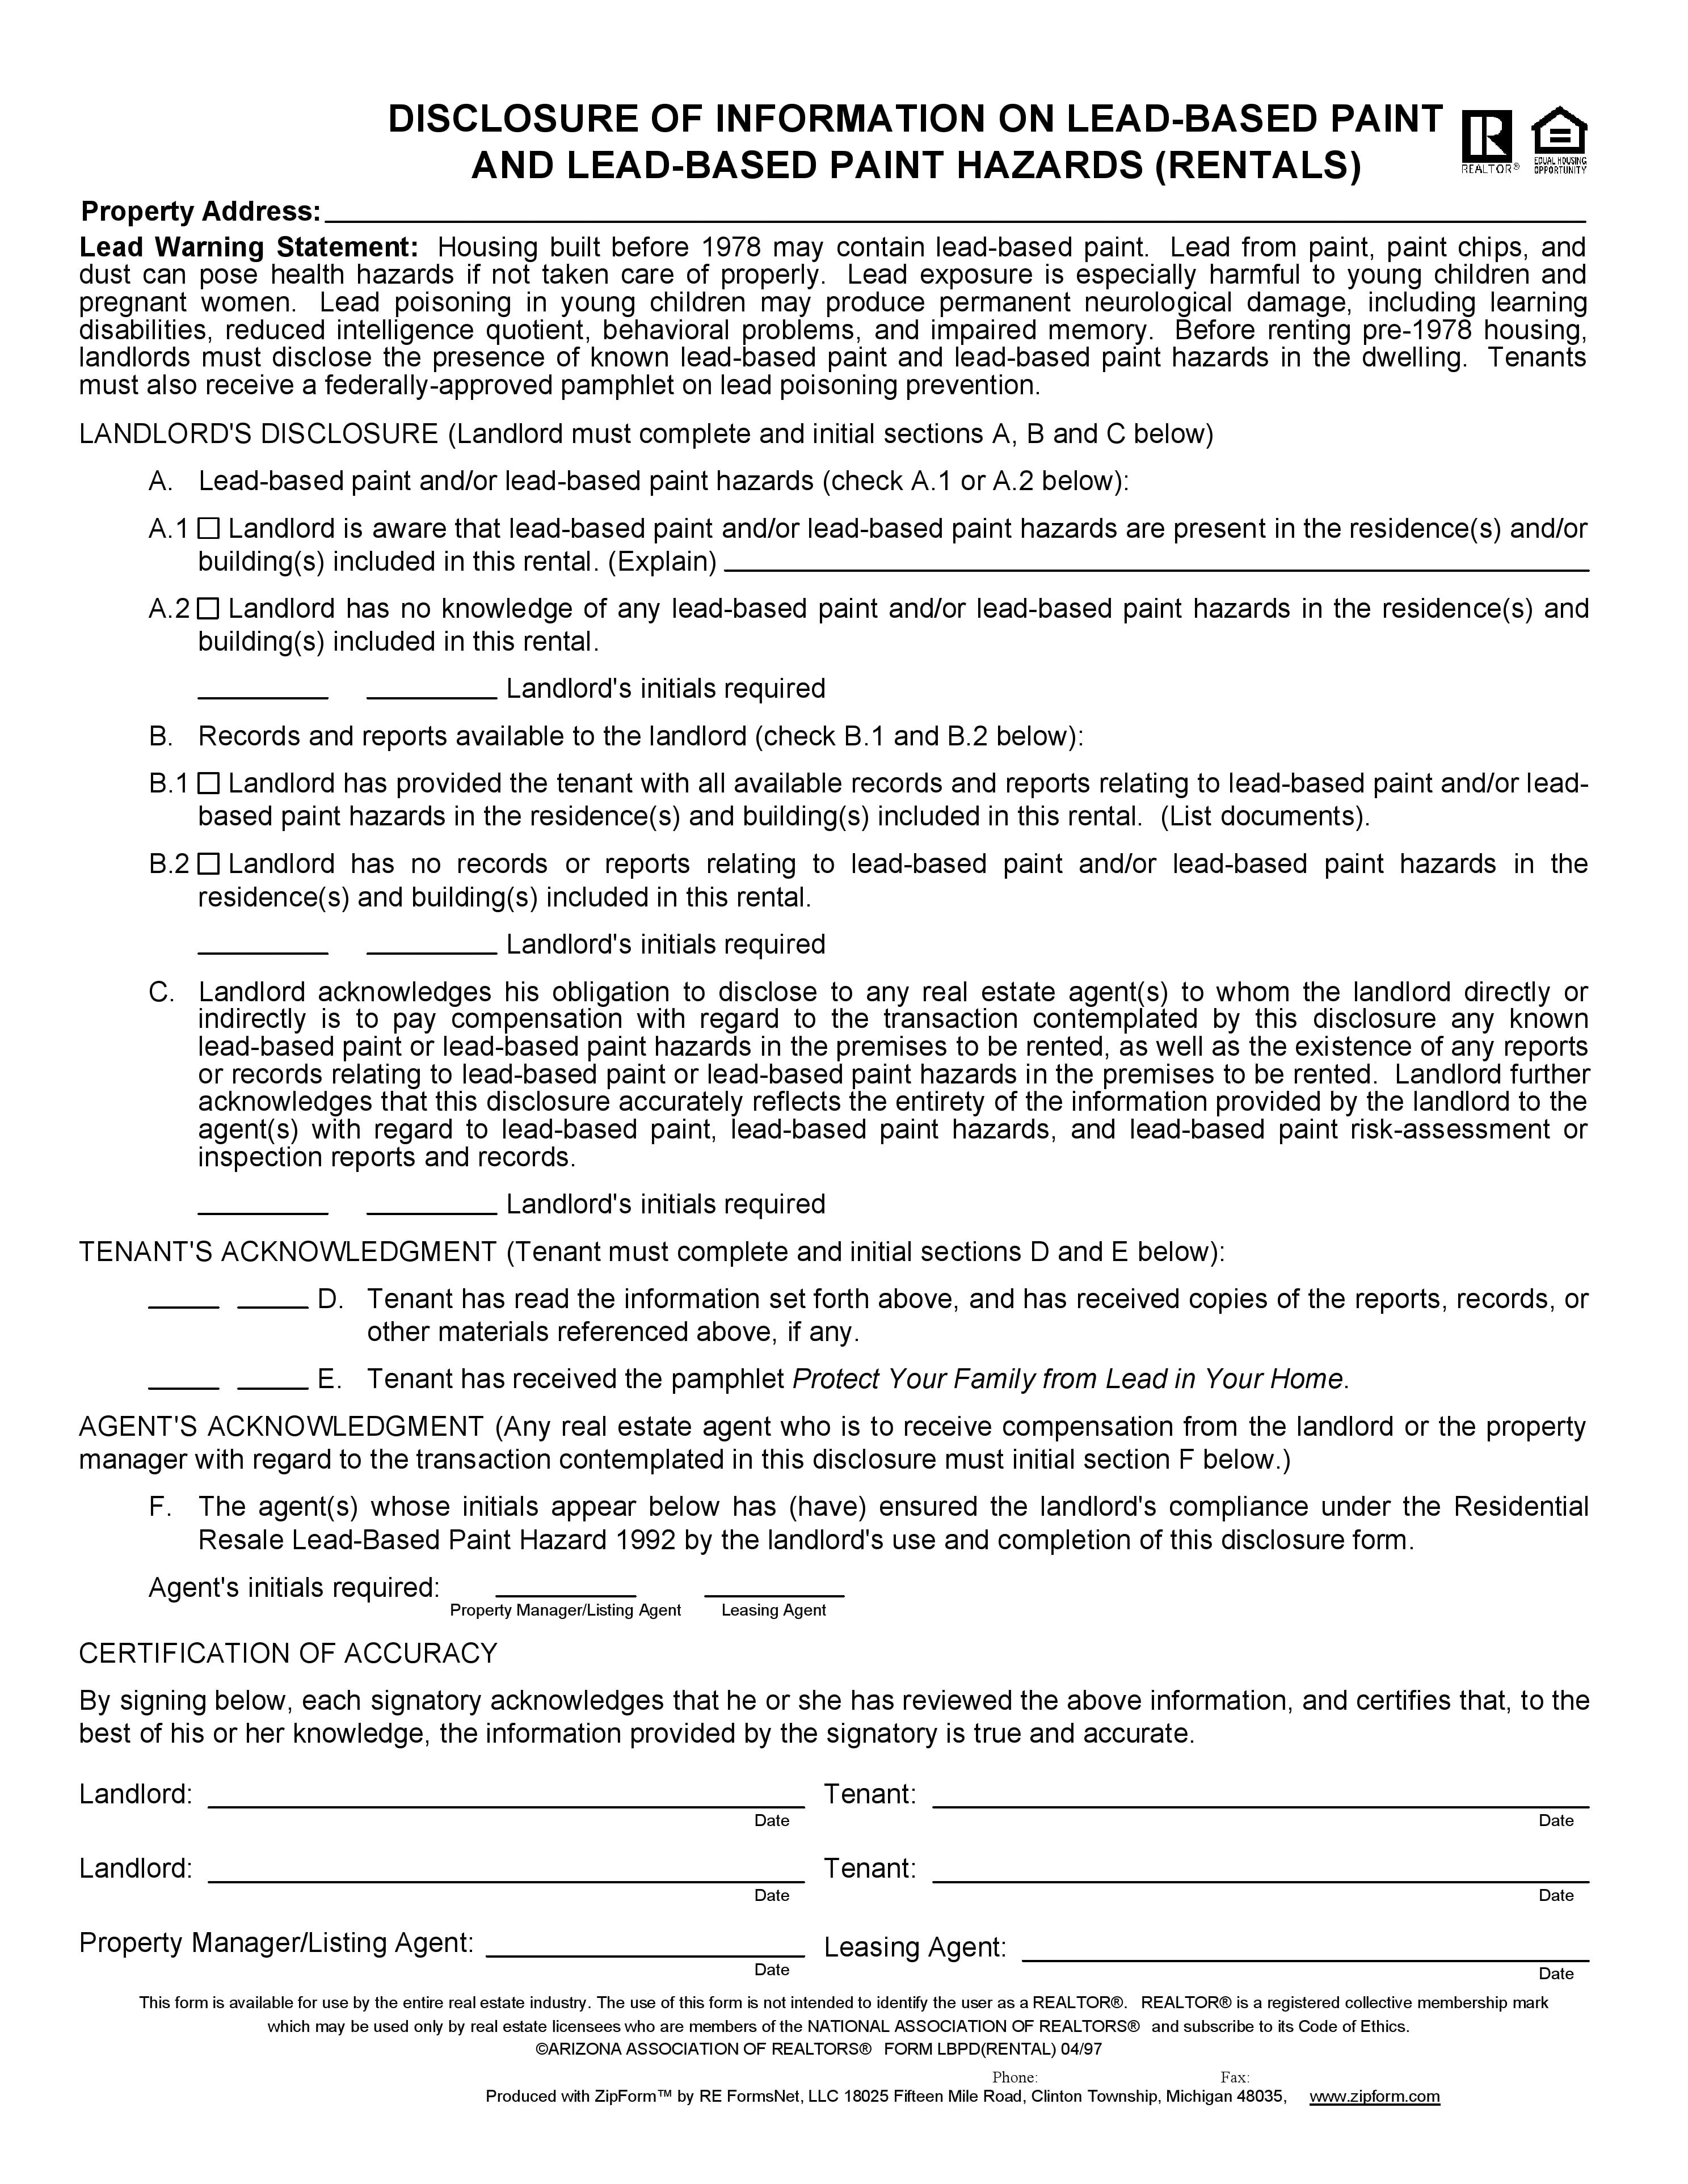 Free Arizona Lead Based Paint Disclosure Form Pdf Template Form Download